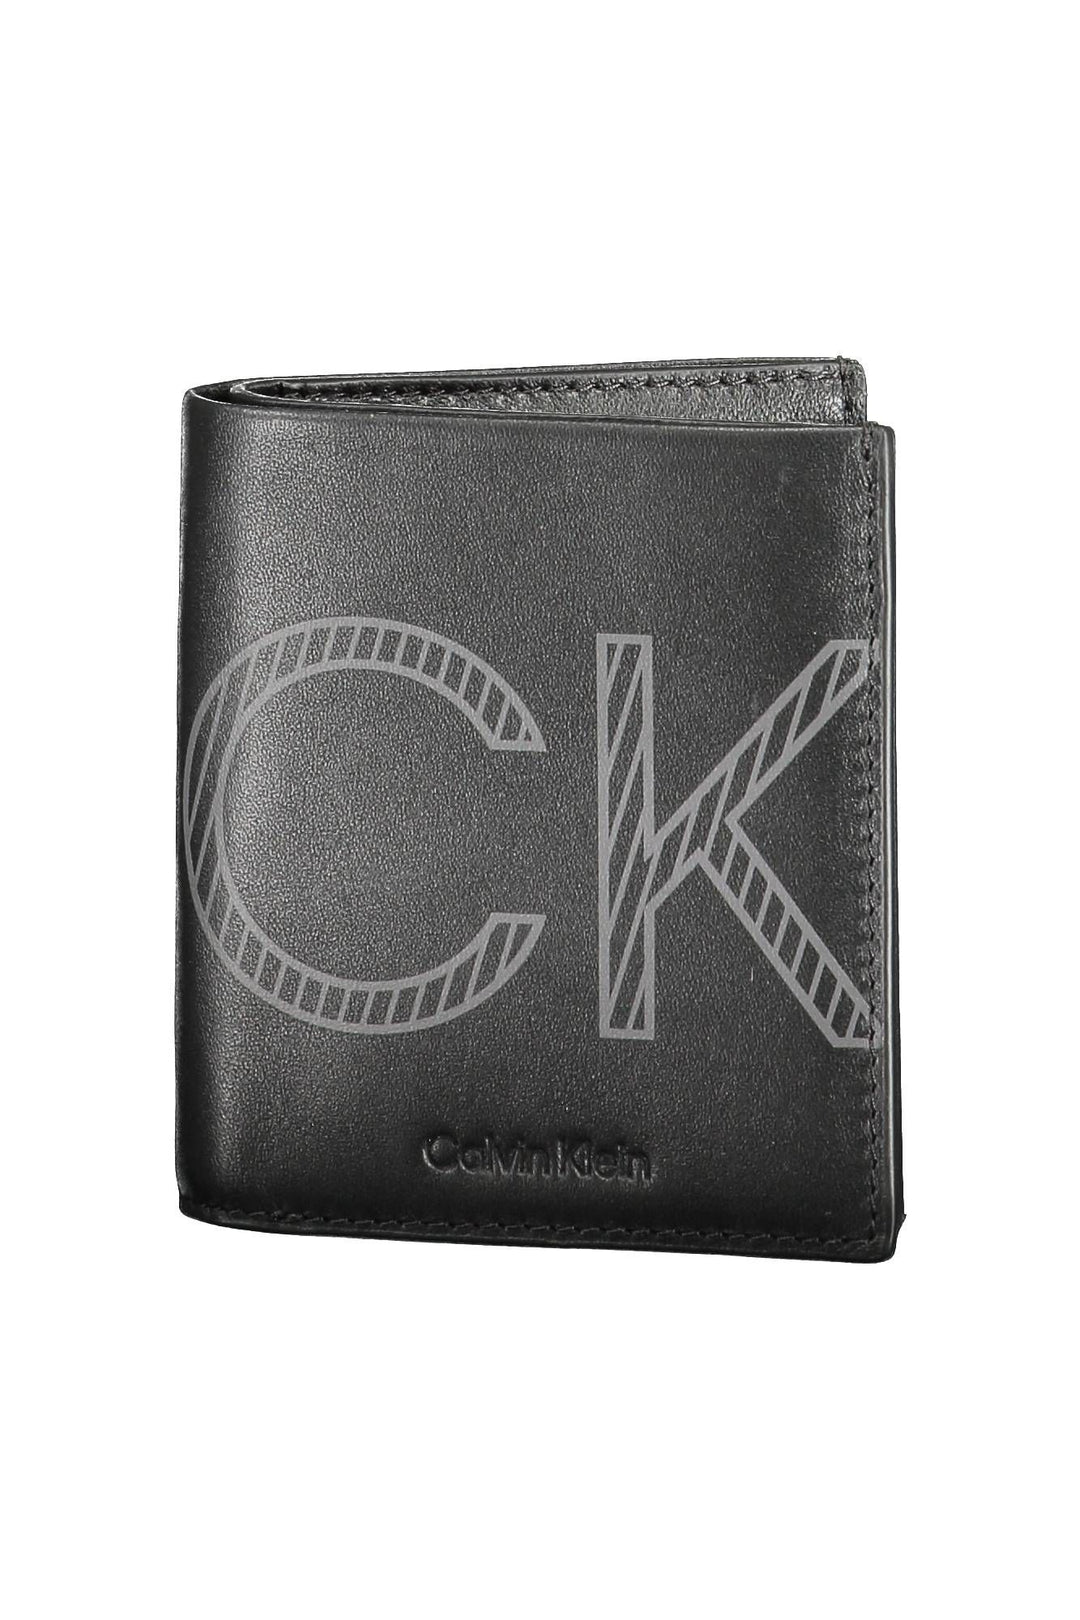 Calvin Klein Sleek Dual Compartment Leather Wallet